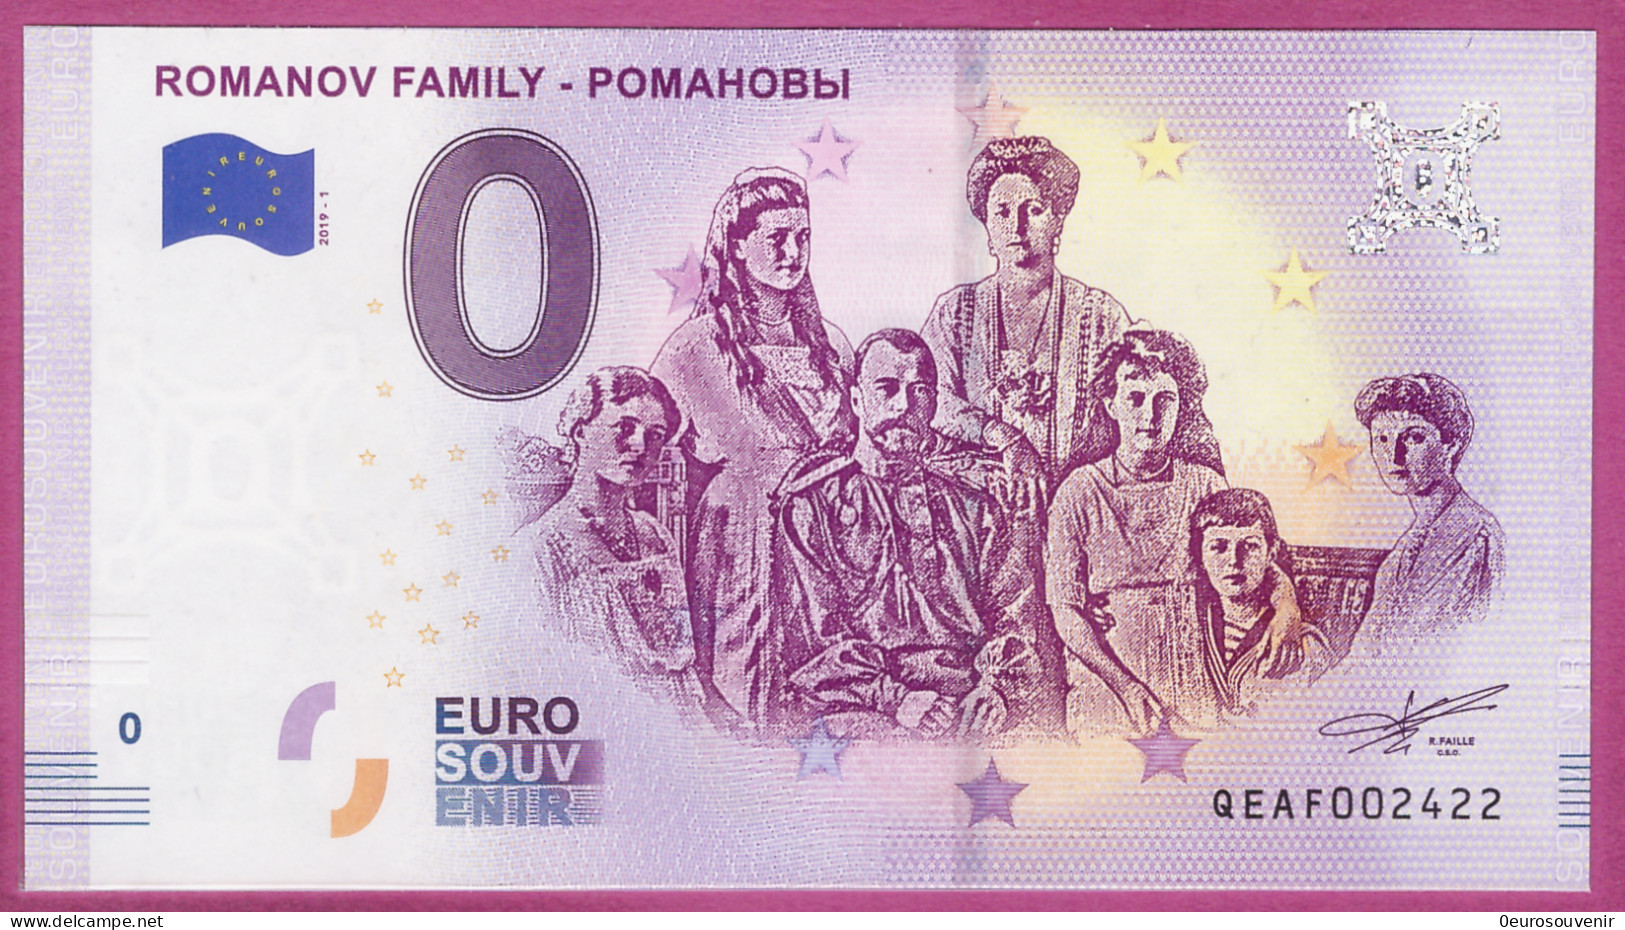 0-Euro QEAF 2019-1 ROMANOV FAMILY - РОМАНОВЫ - Privatentwürfe